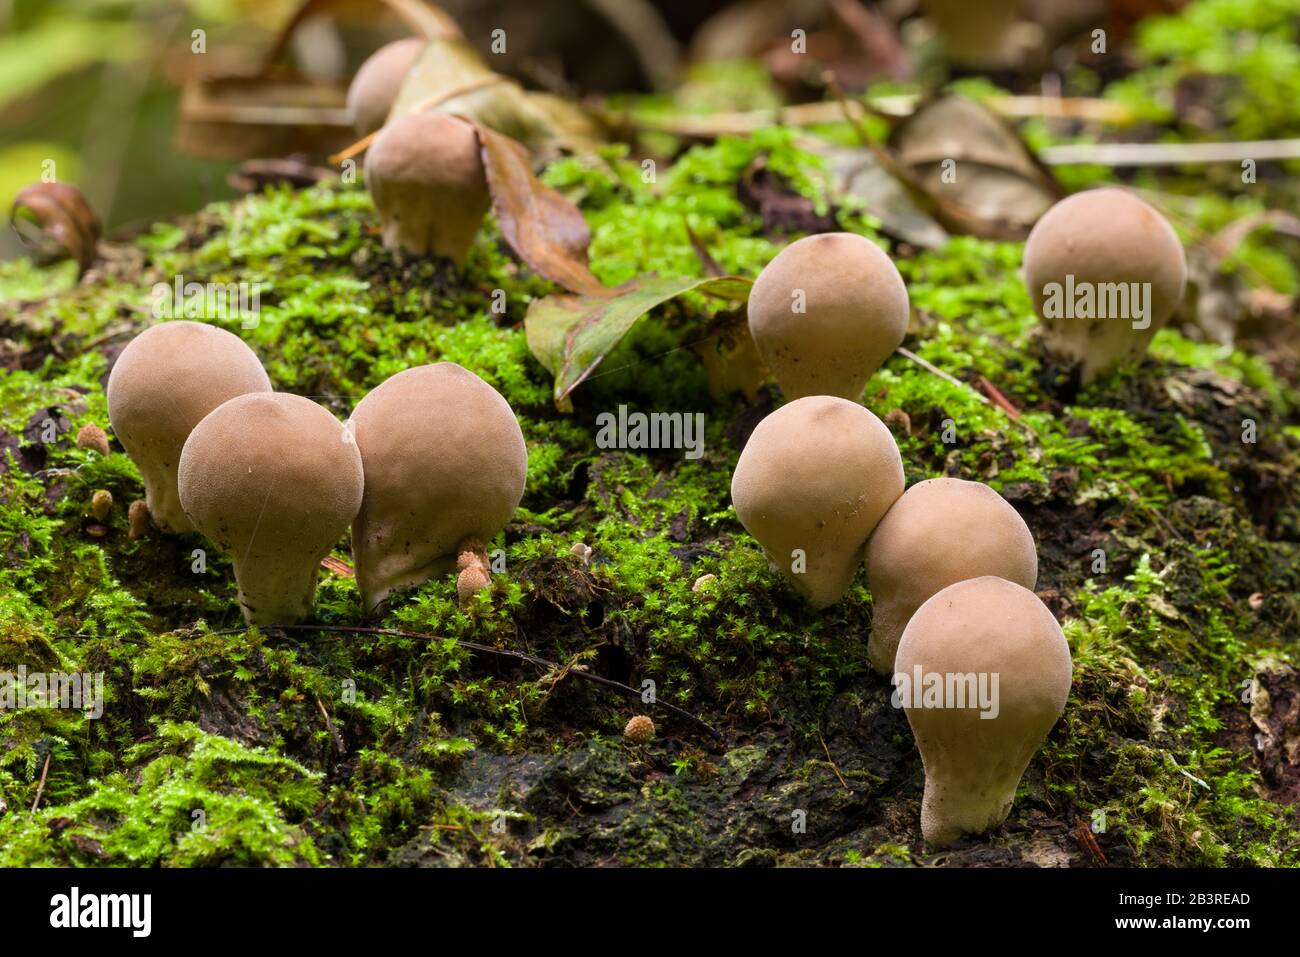 Stumpfpuffball (Lycoperdon pyriforme) Pilze, die auf Totholz wachsen. Auch bekannt als Pear-förmiger Puffball. Stockfoto